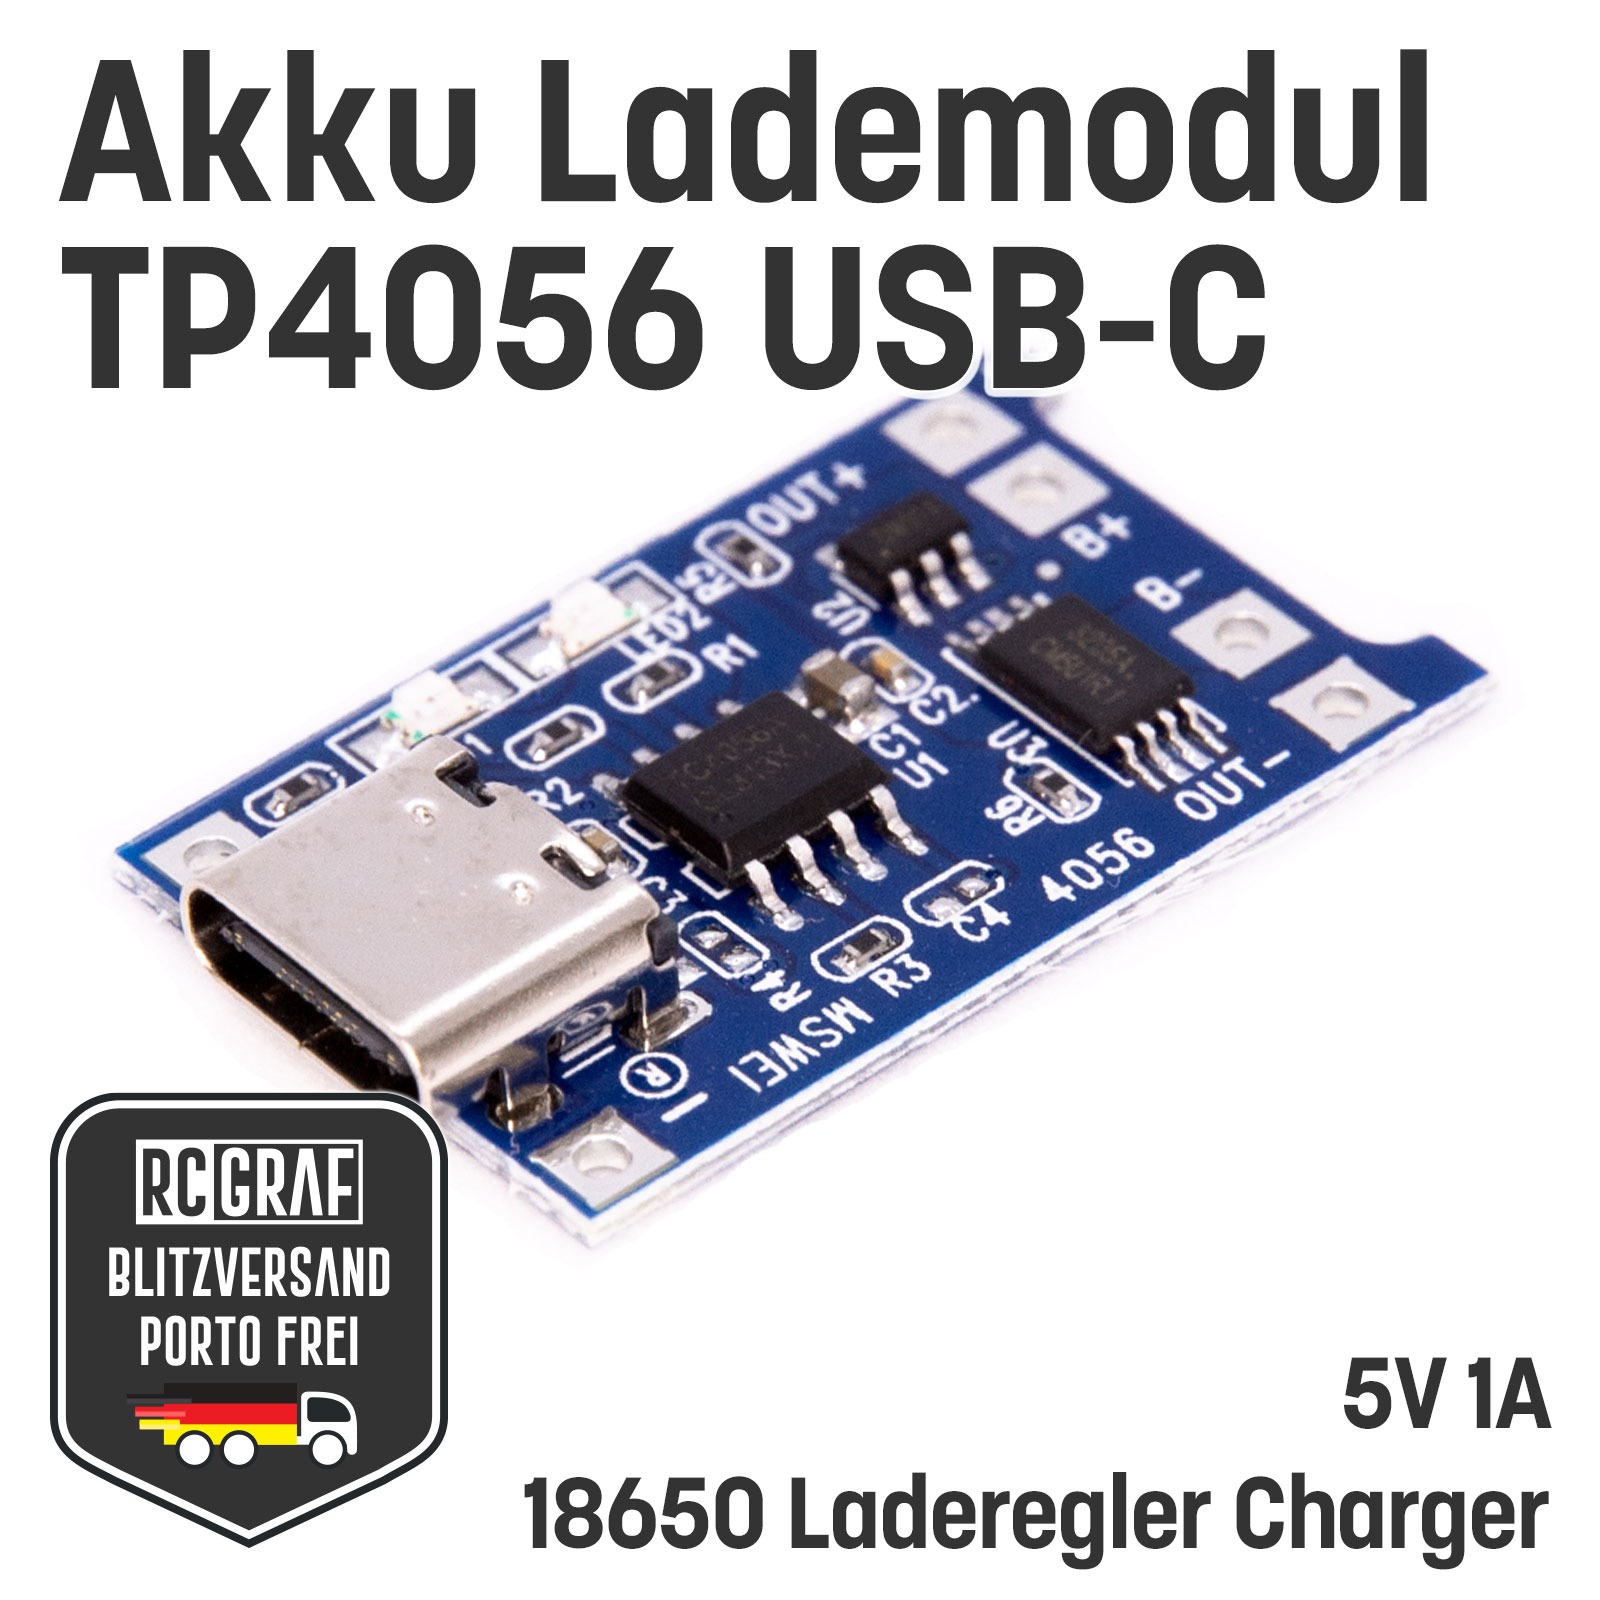 5x Akku Lademodul 5V 1A TP4056 USB C 2